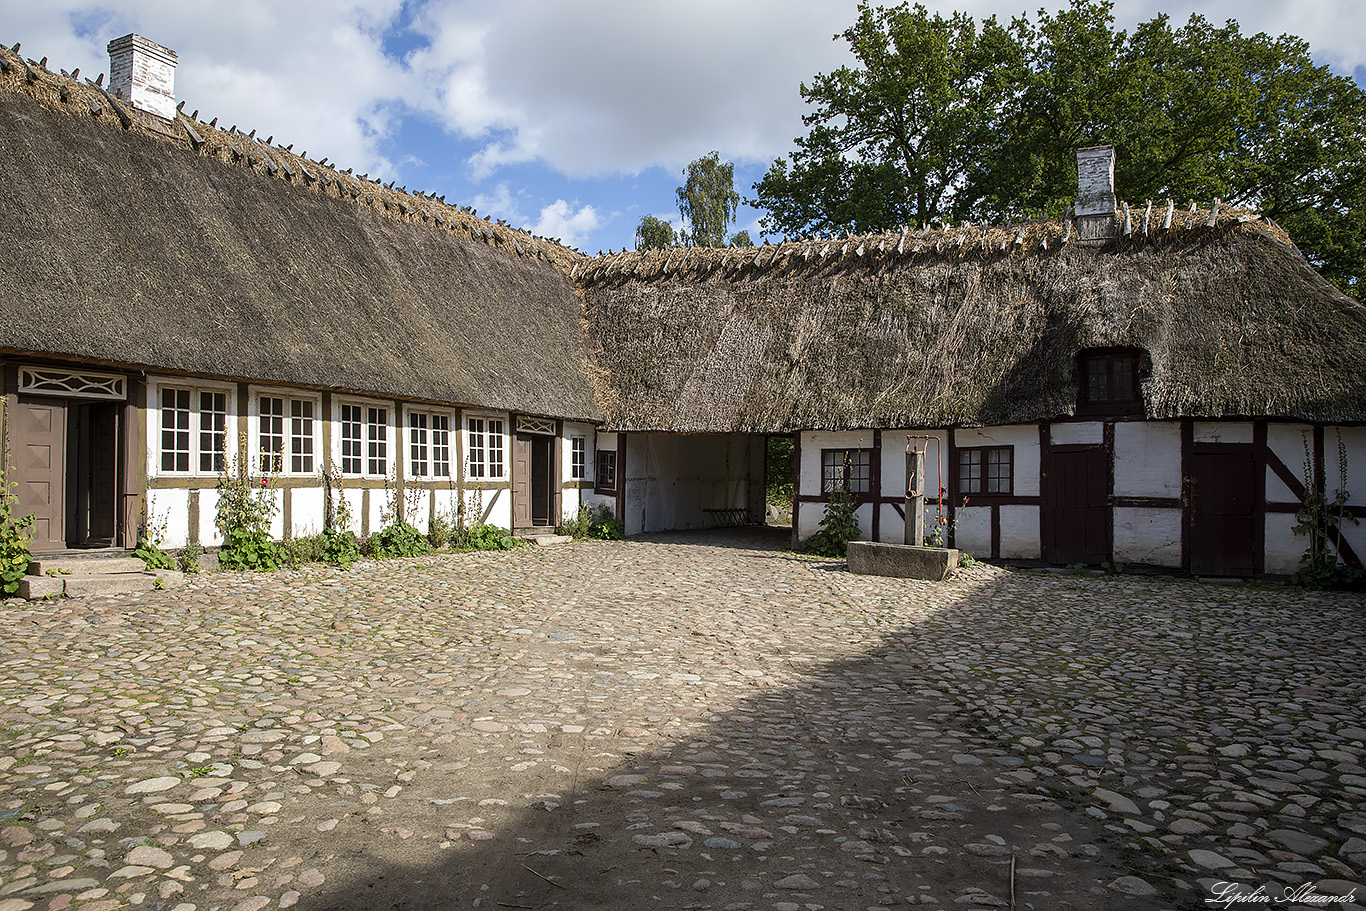 Фюнская деревня (The Funen Village)  - Оденсе (Odense) - Дания (Danmark)